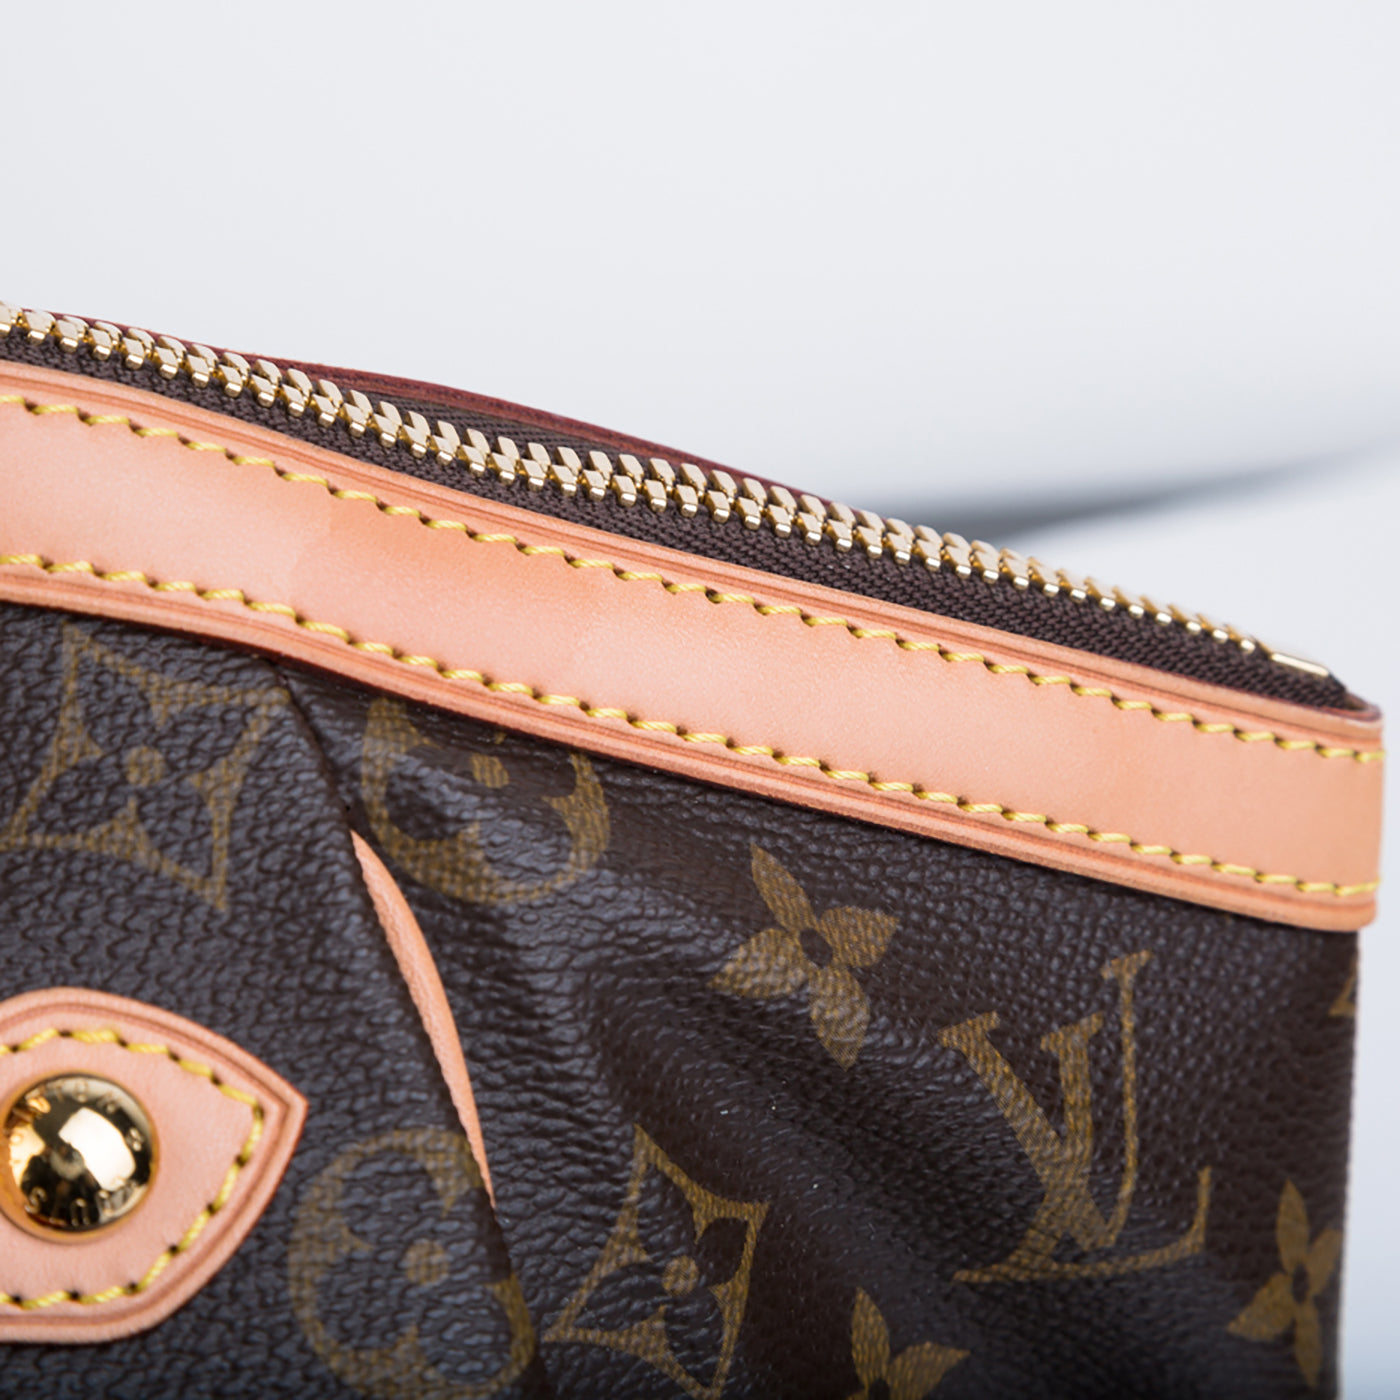 Louis Vuitton, Bags, Louis Vuitton Tivoli Gm Monogram Handbag Must Have